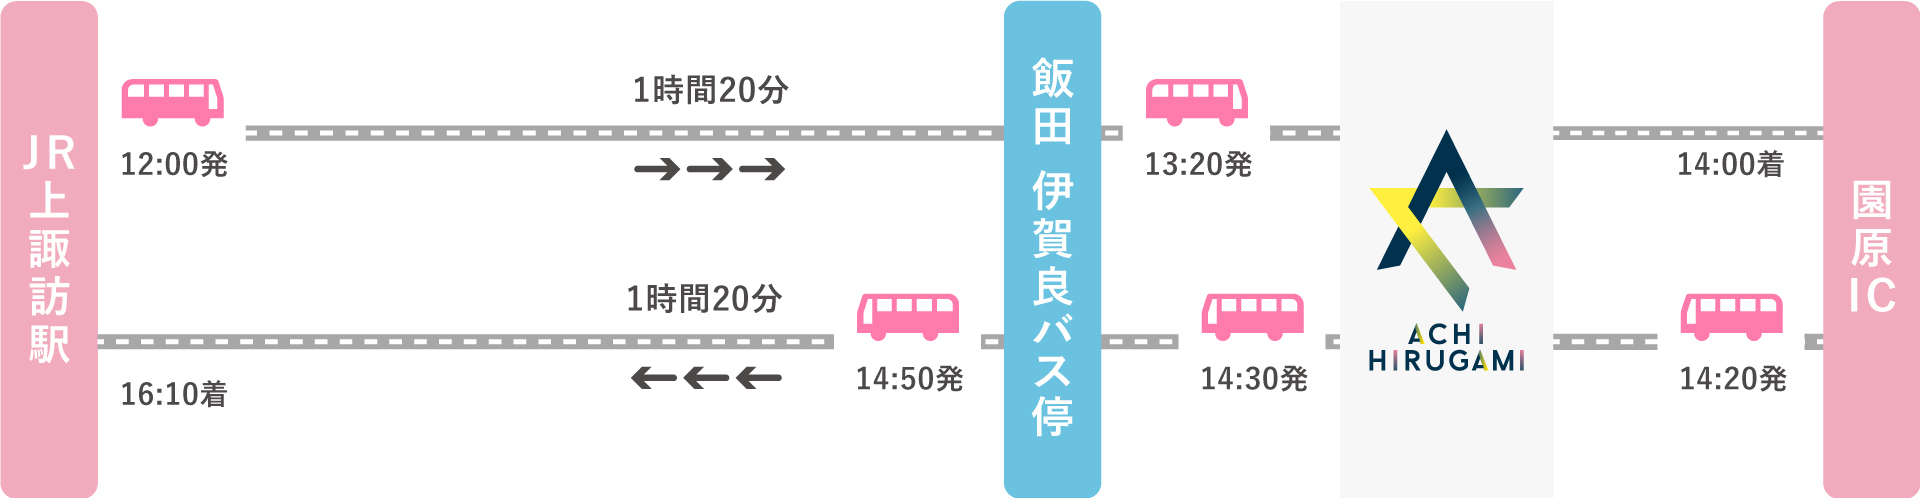 JR中津川駅と昼神温泉の直行バス